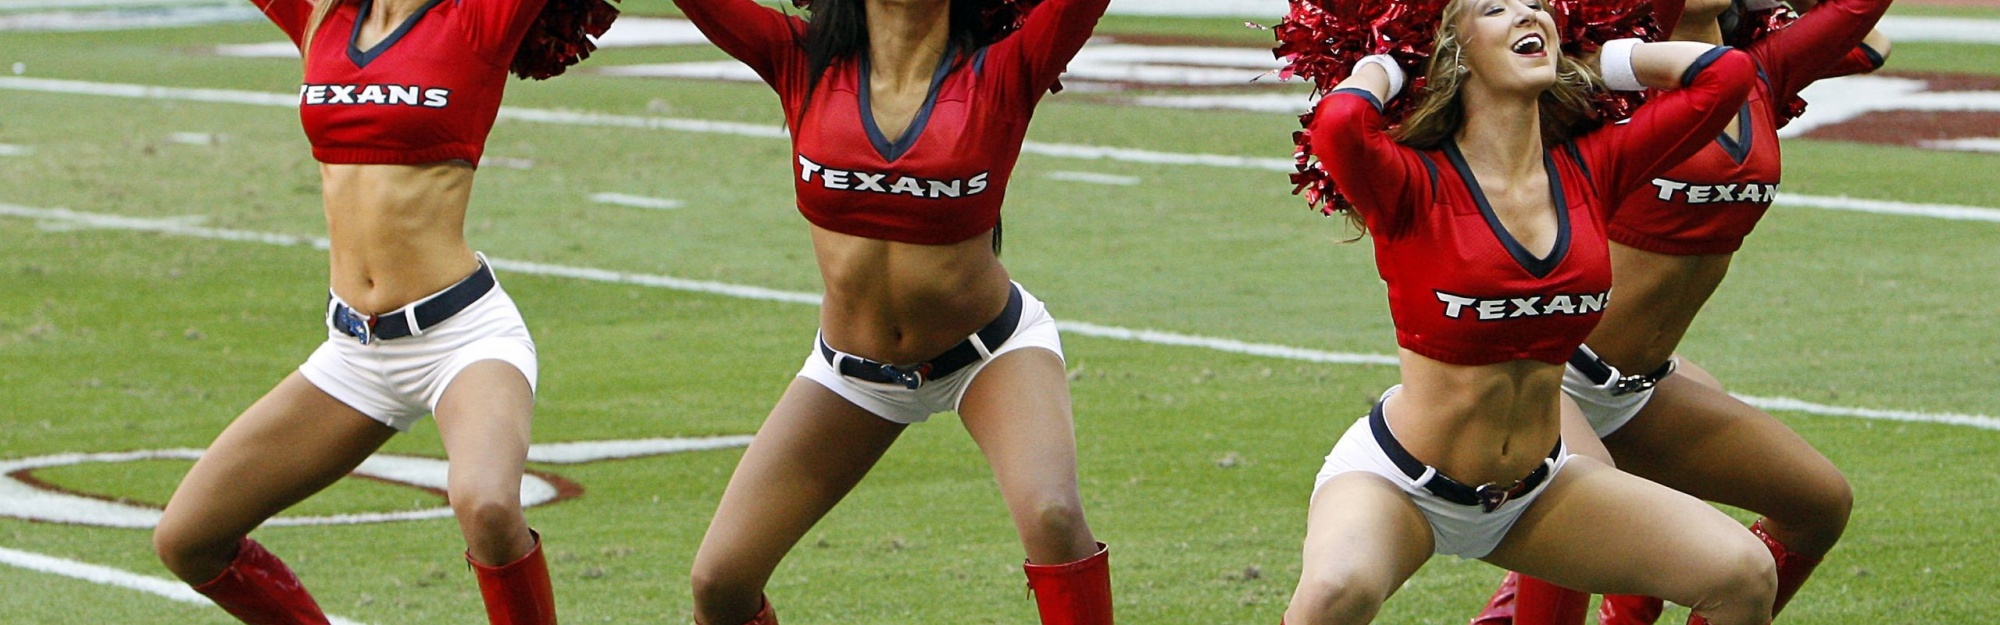 Houston Texans Nfl American Football Cheerleaders